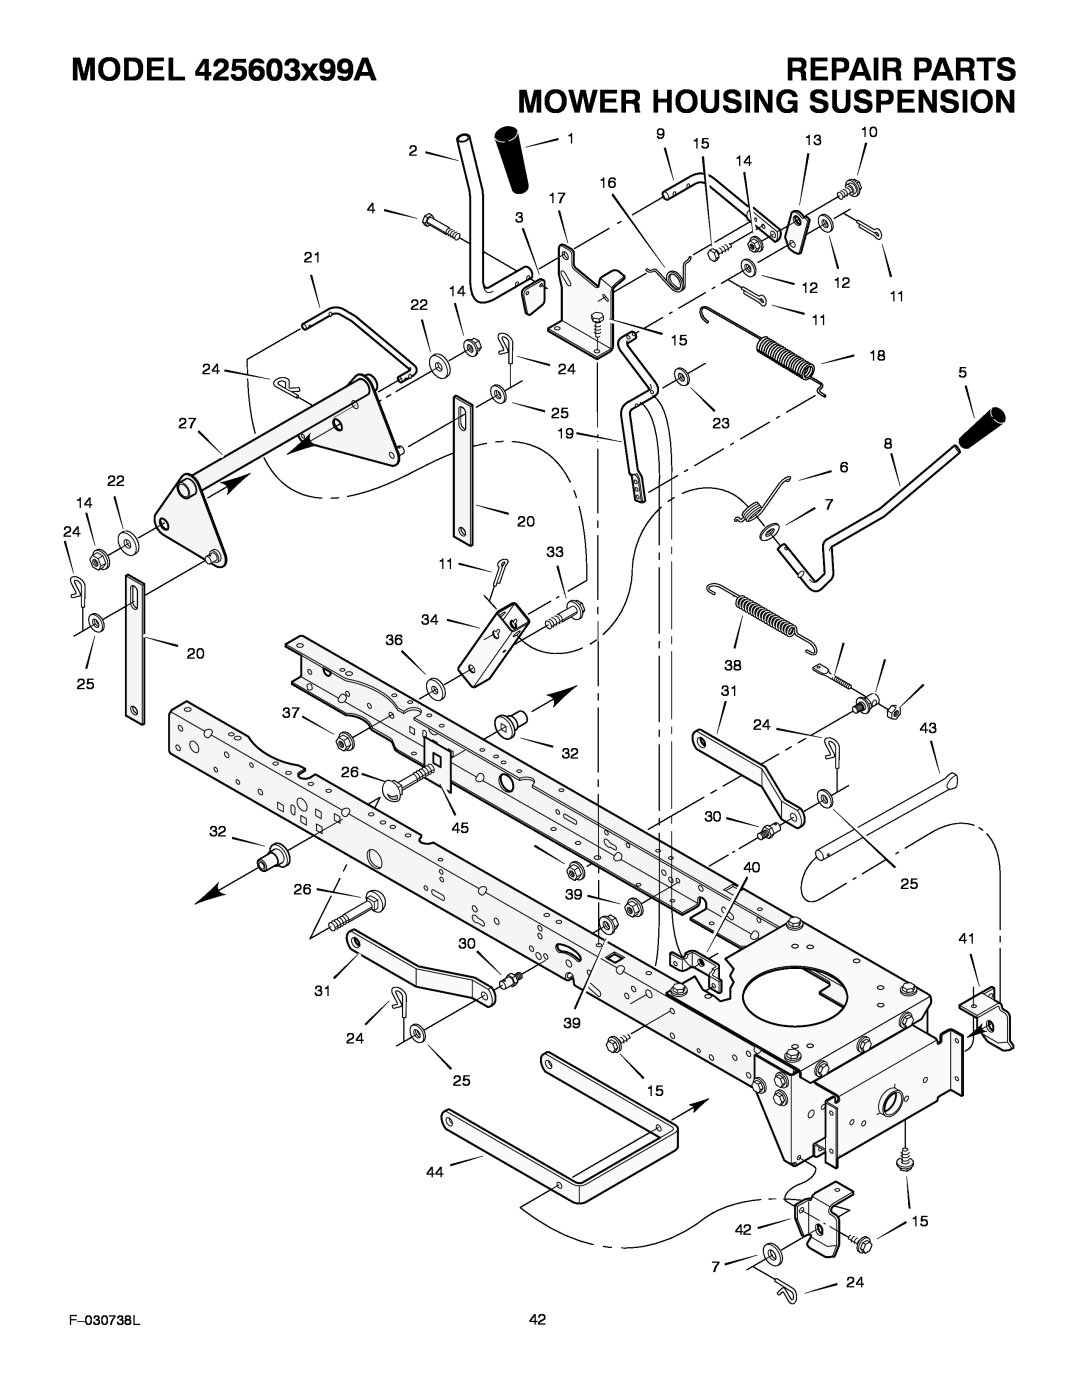 Murray manual Mower Housing Suspension, MODEL 425603x99A, Repair Parts, F-030738L 